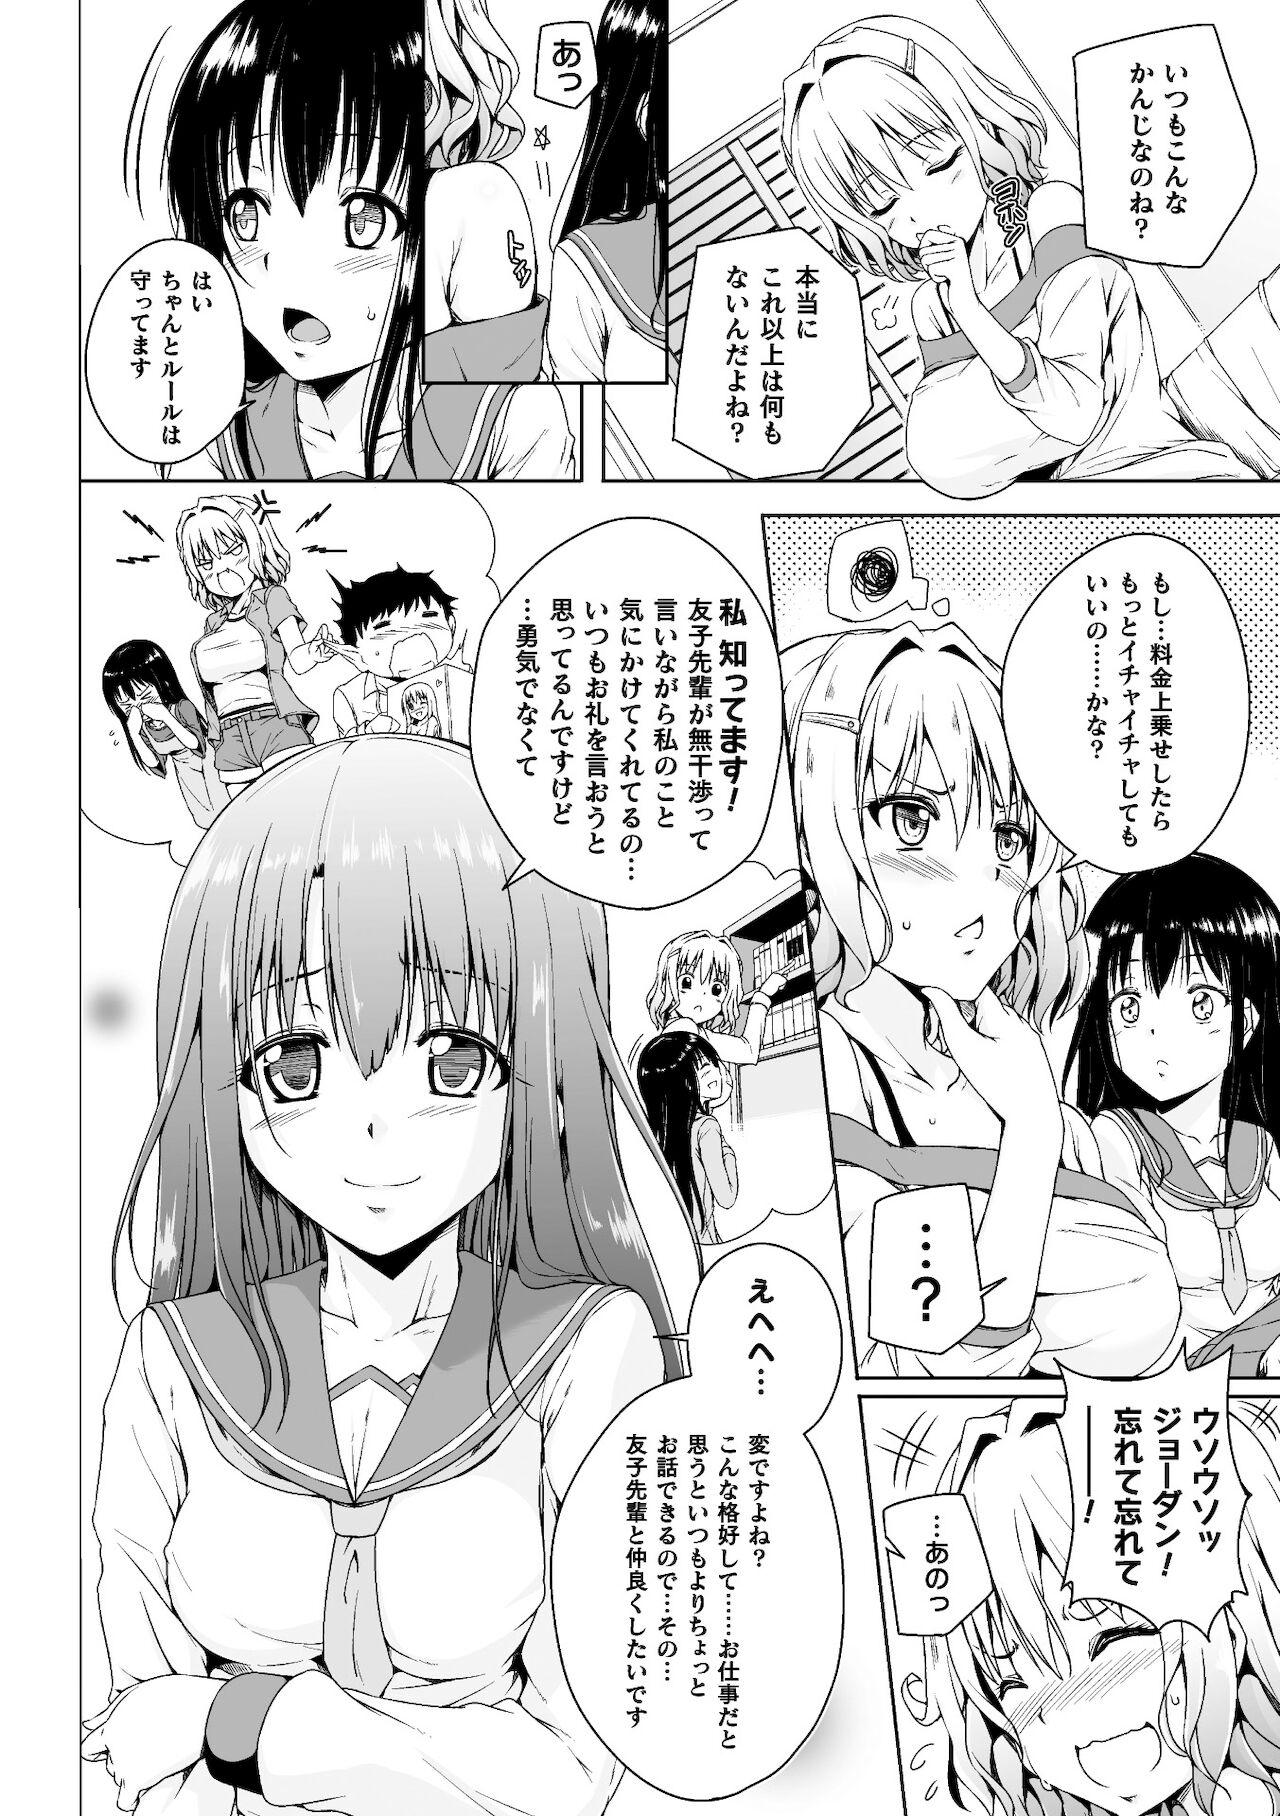 Girlongirl 2D Comic Magazine Mamakatsu Yuri Ecchi Vol. 2 Swing - Page 8